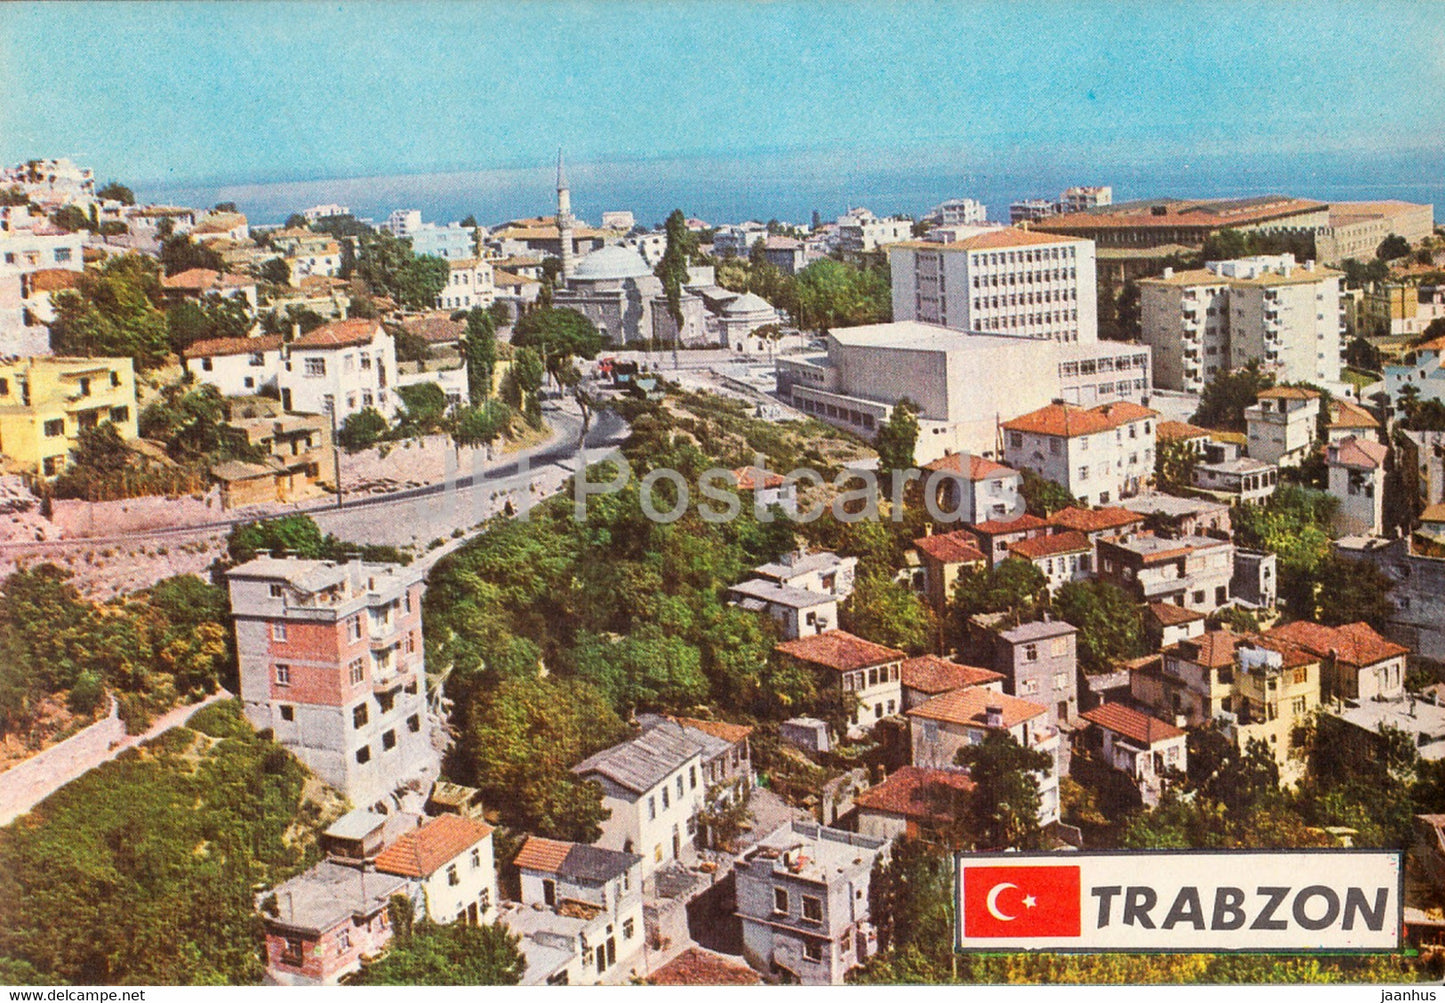 Trabzon - Green Black Sea Region - city view - 1987 - Turkey - used - JH Postcards